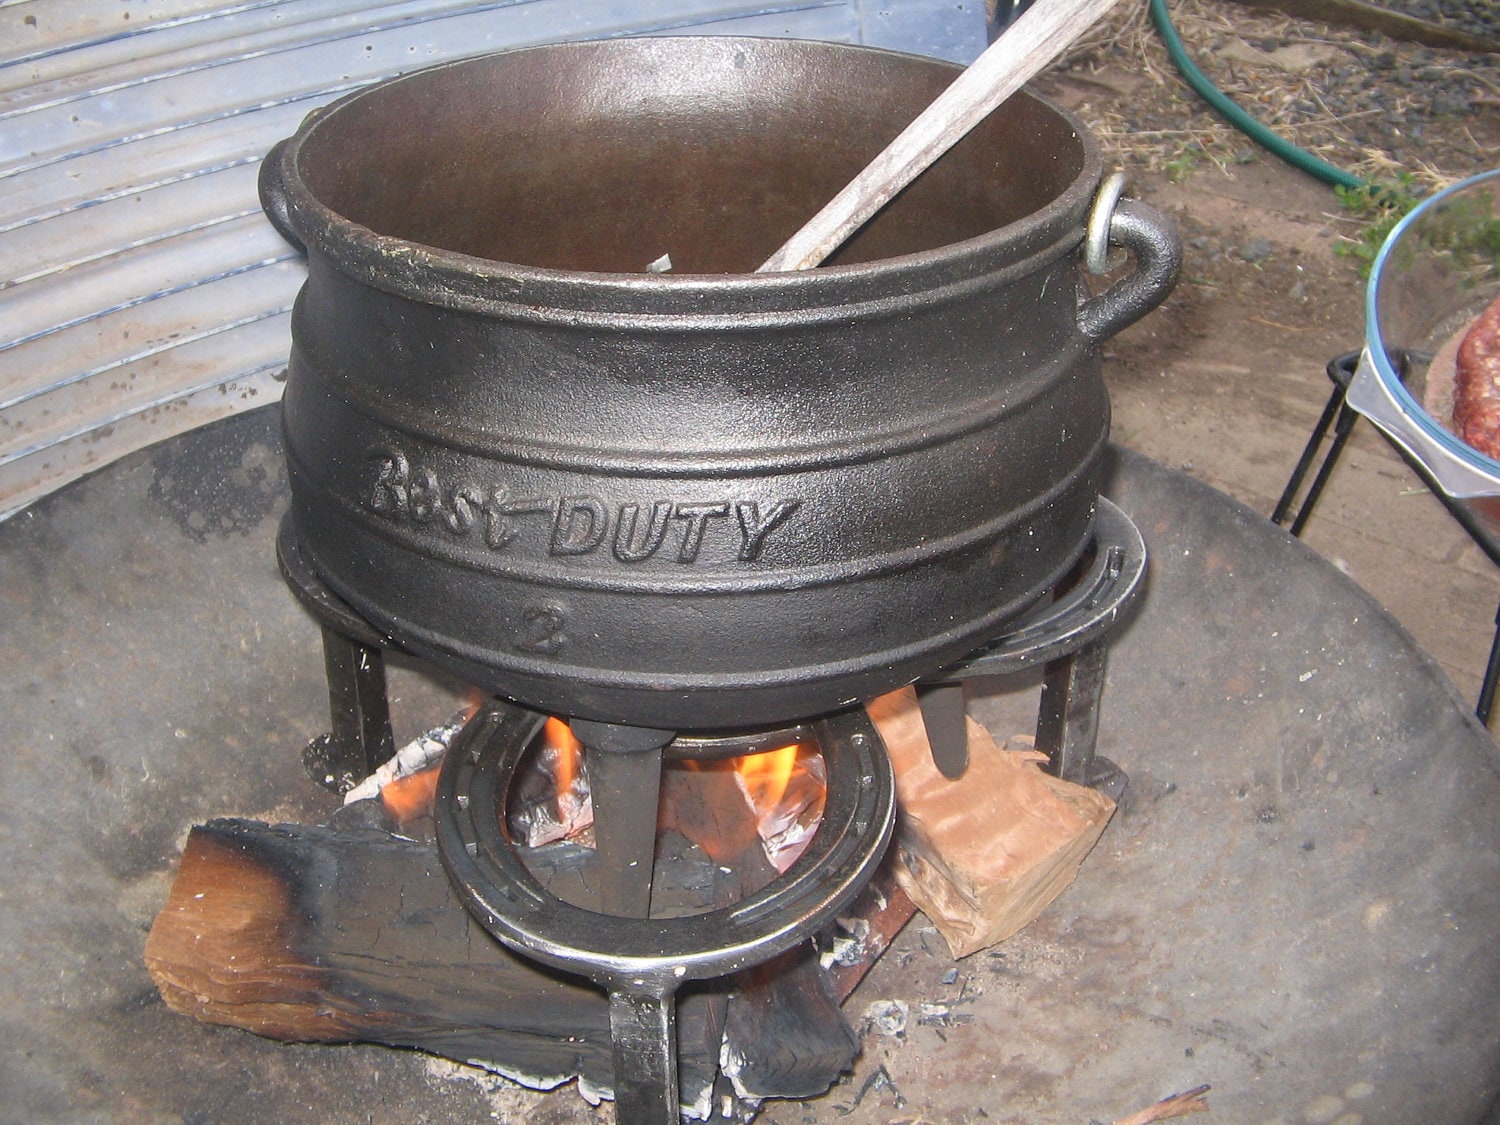 Campfire Pot Stand Heavy Duty Wood Open, Fire Pit Pot